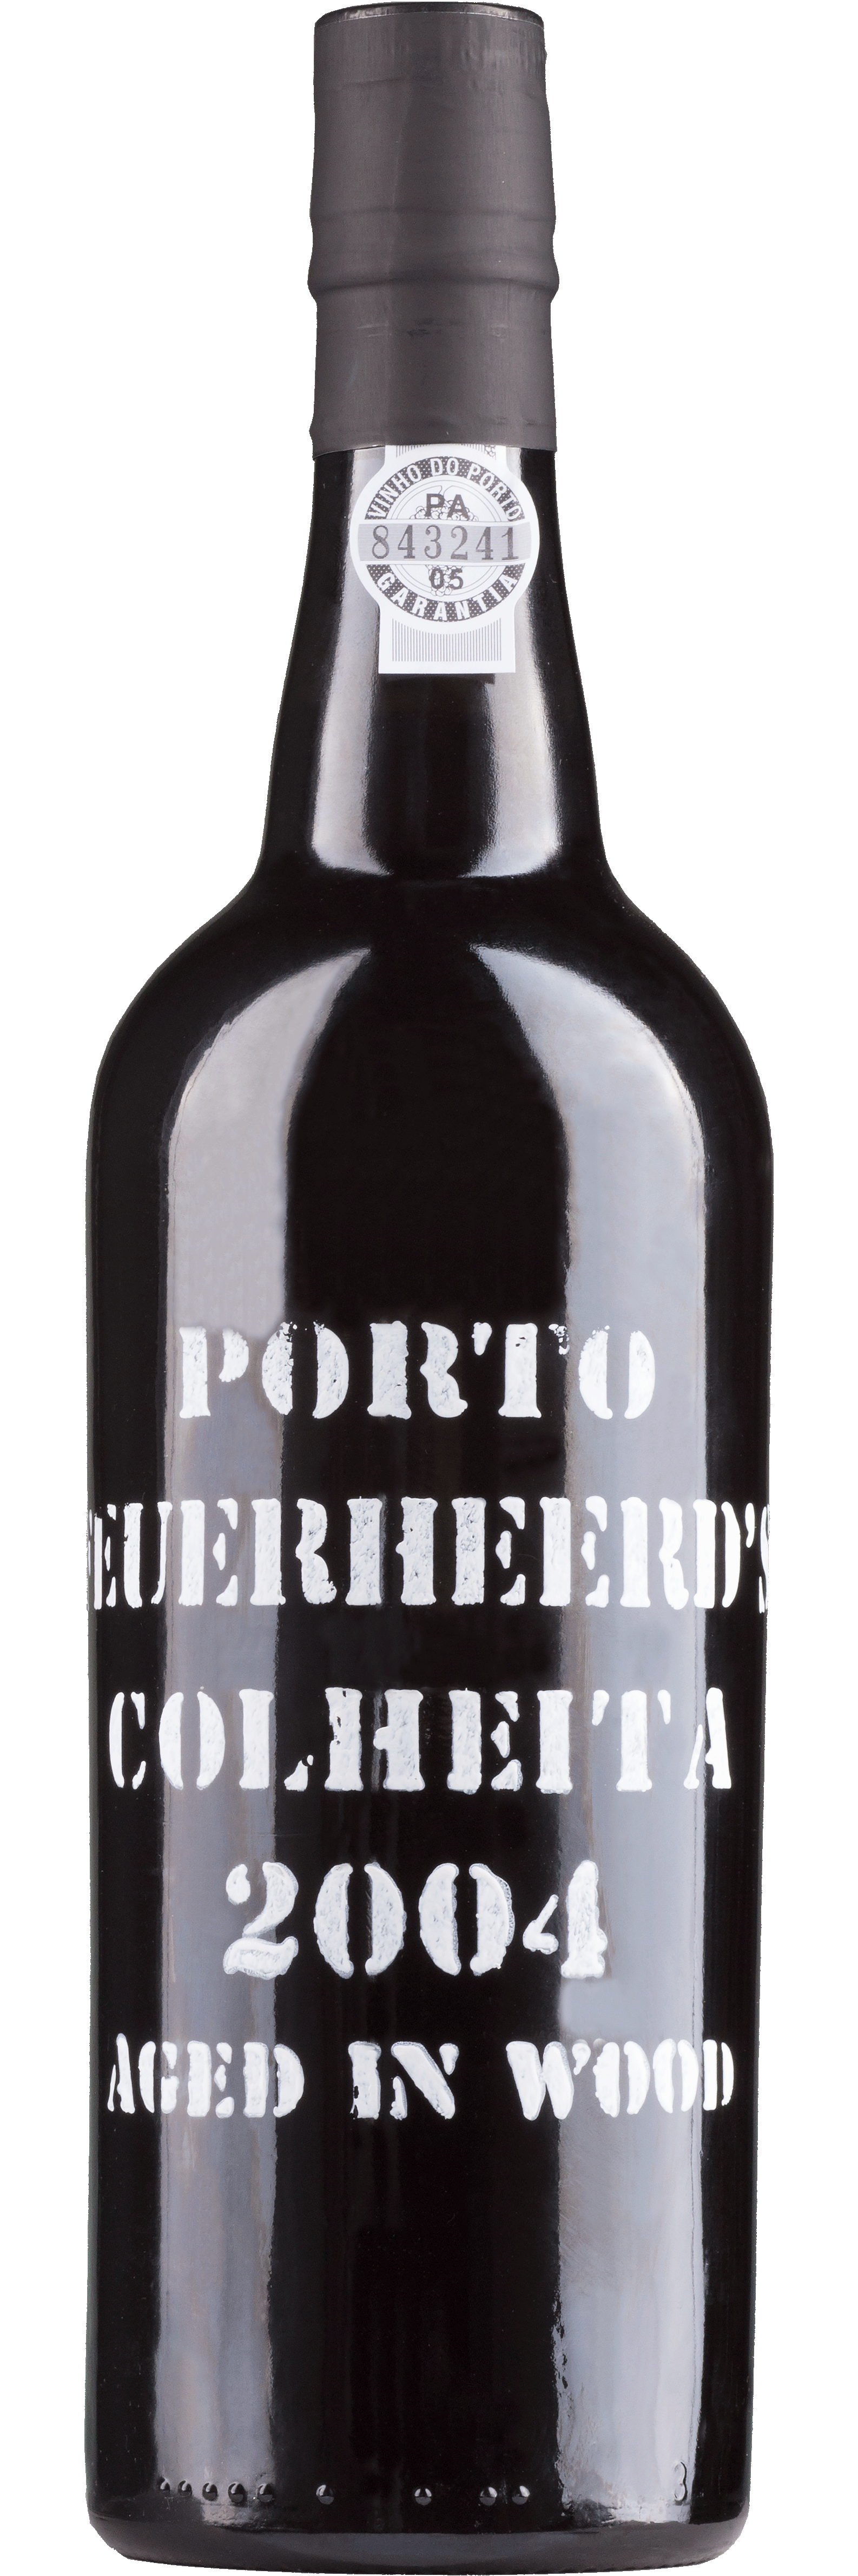 Porto Colheita 2004 - Portugal - Portwein - 0,75l - 20% vol